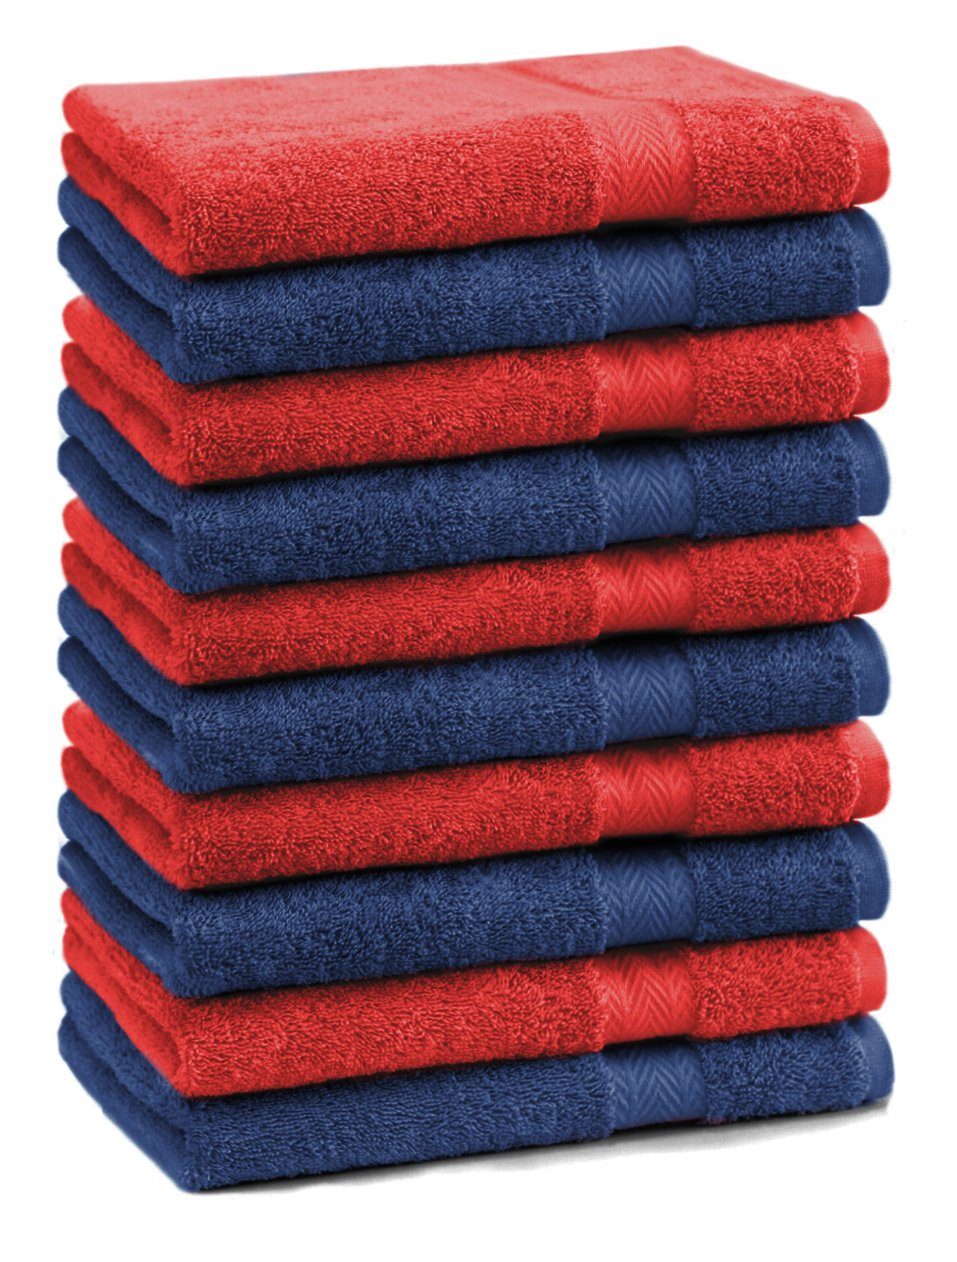 Betz Gästehandtücher 10 Stück Gästehandtücher Premium 100% Baumwolle Gästetuch-Set 30x50 cm Farbe dunkelblau und rot, 100% Baumwolle | Gästehandtücher